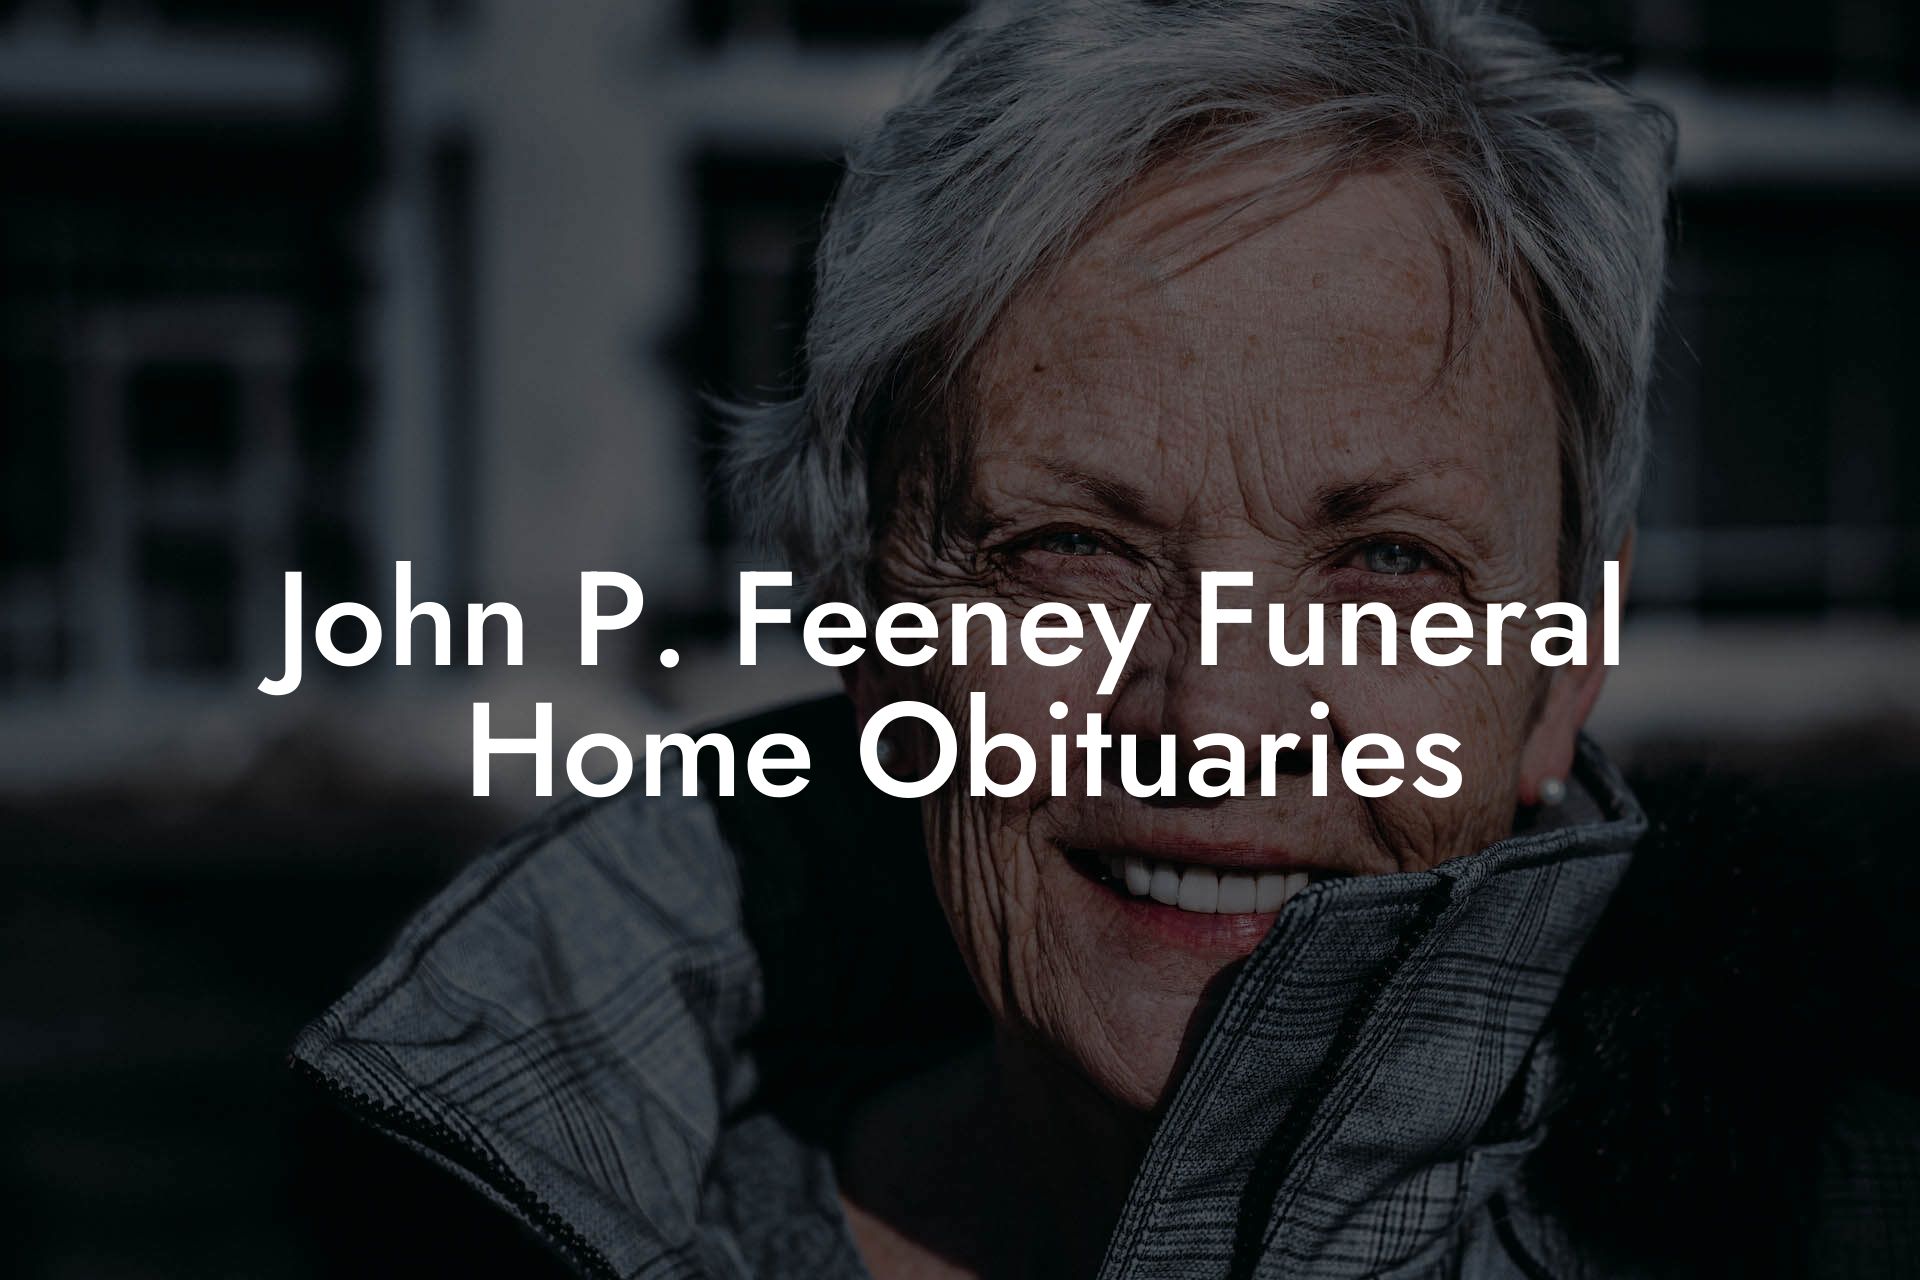 John P. Feeney Funeral Home Obituaries